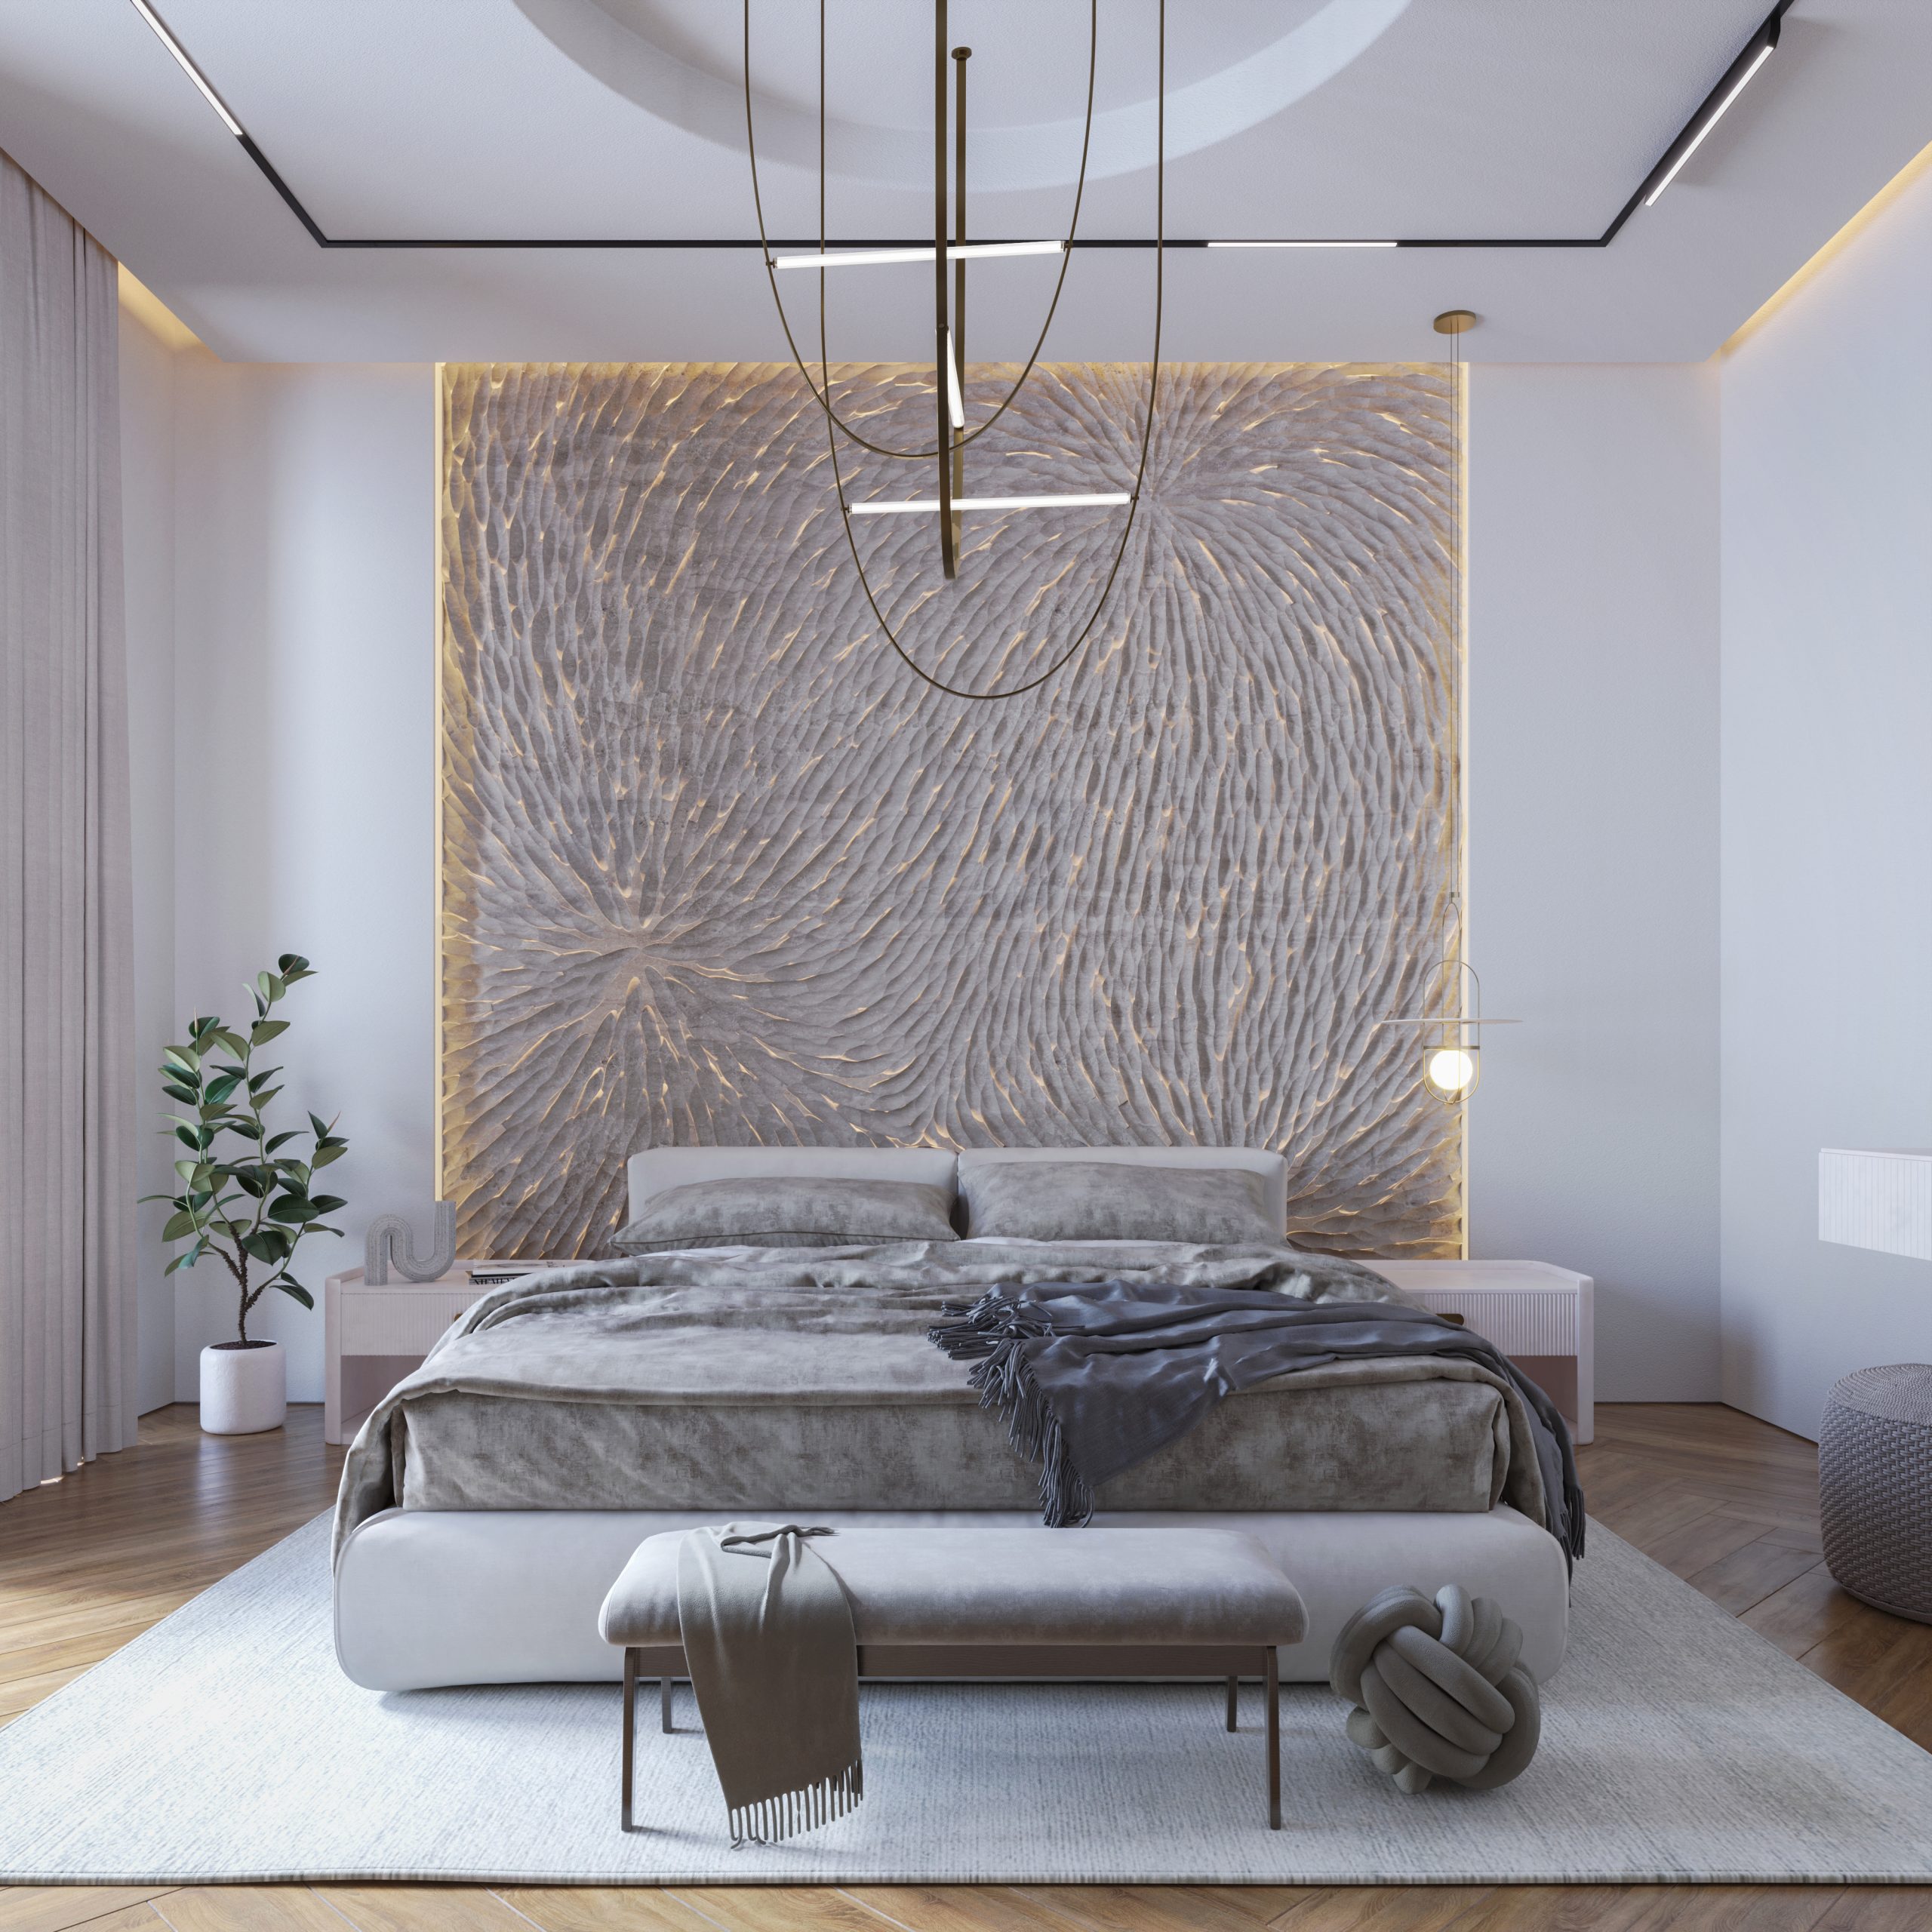 Master bedroom design